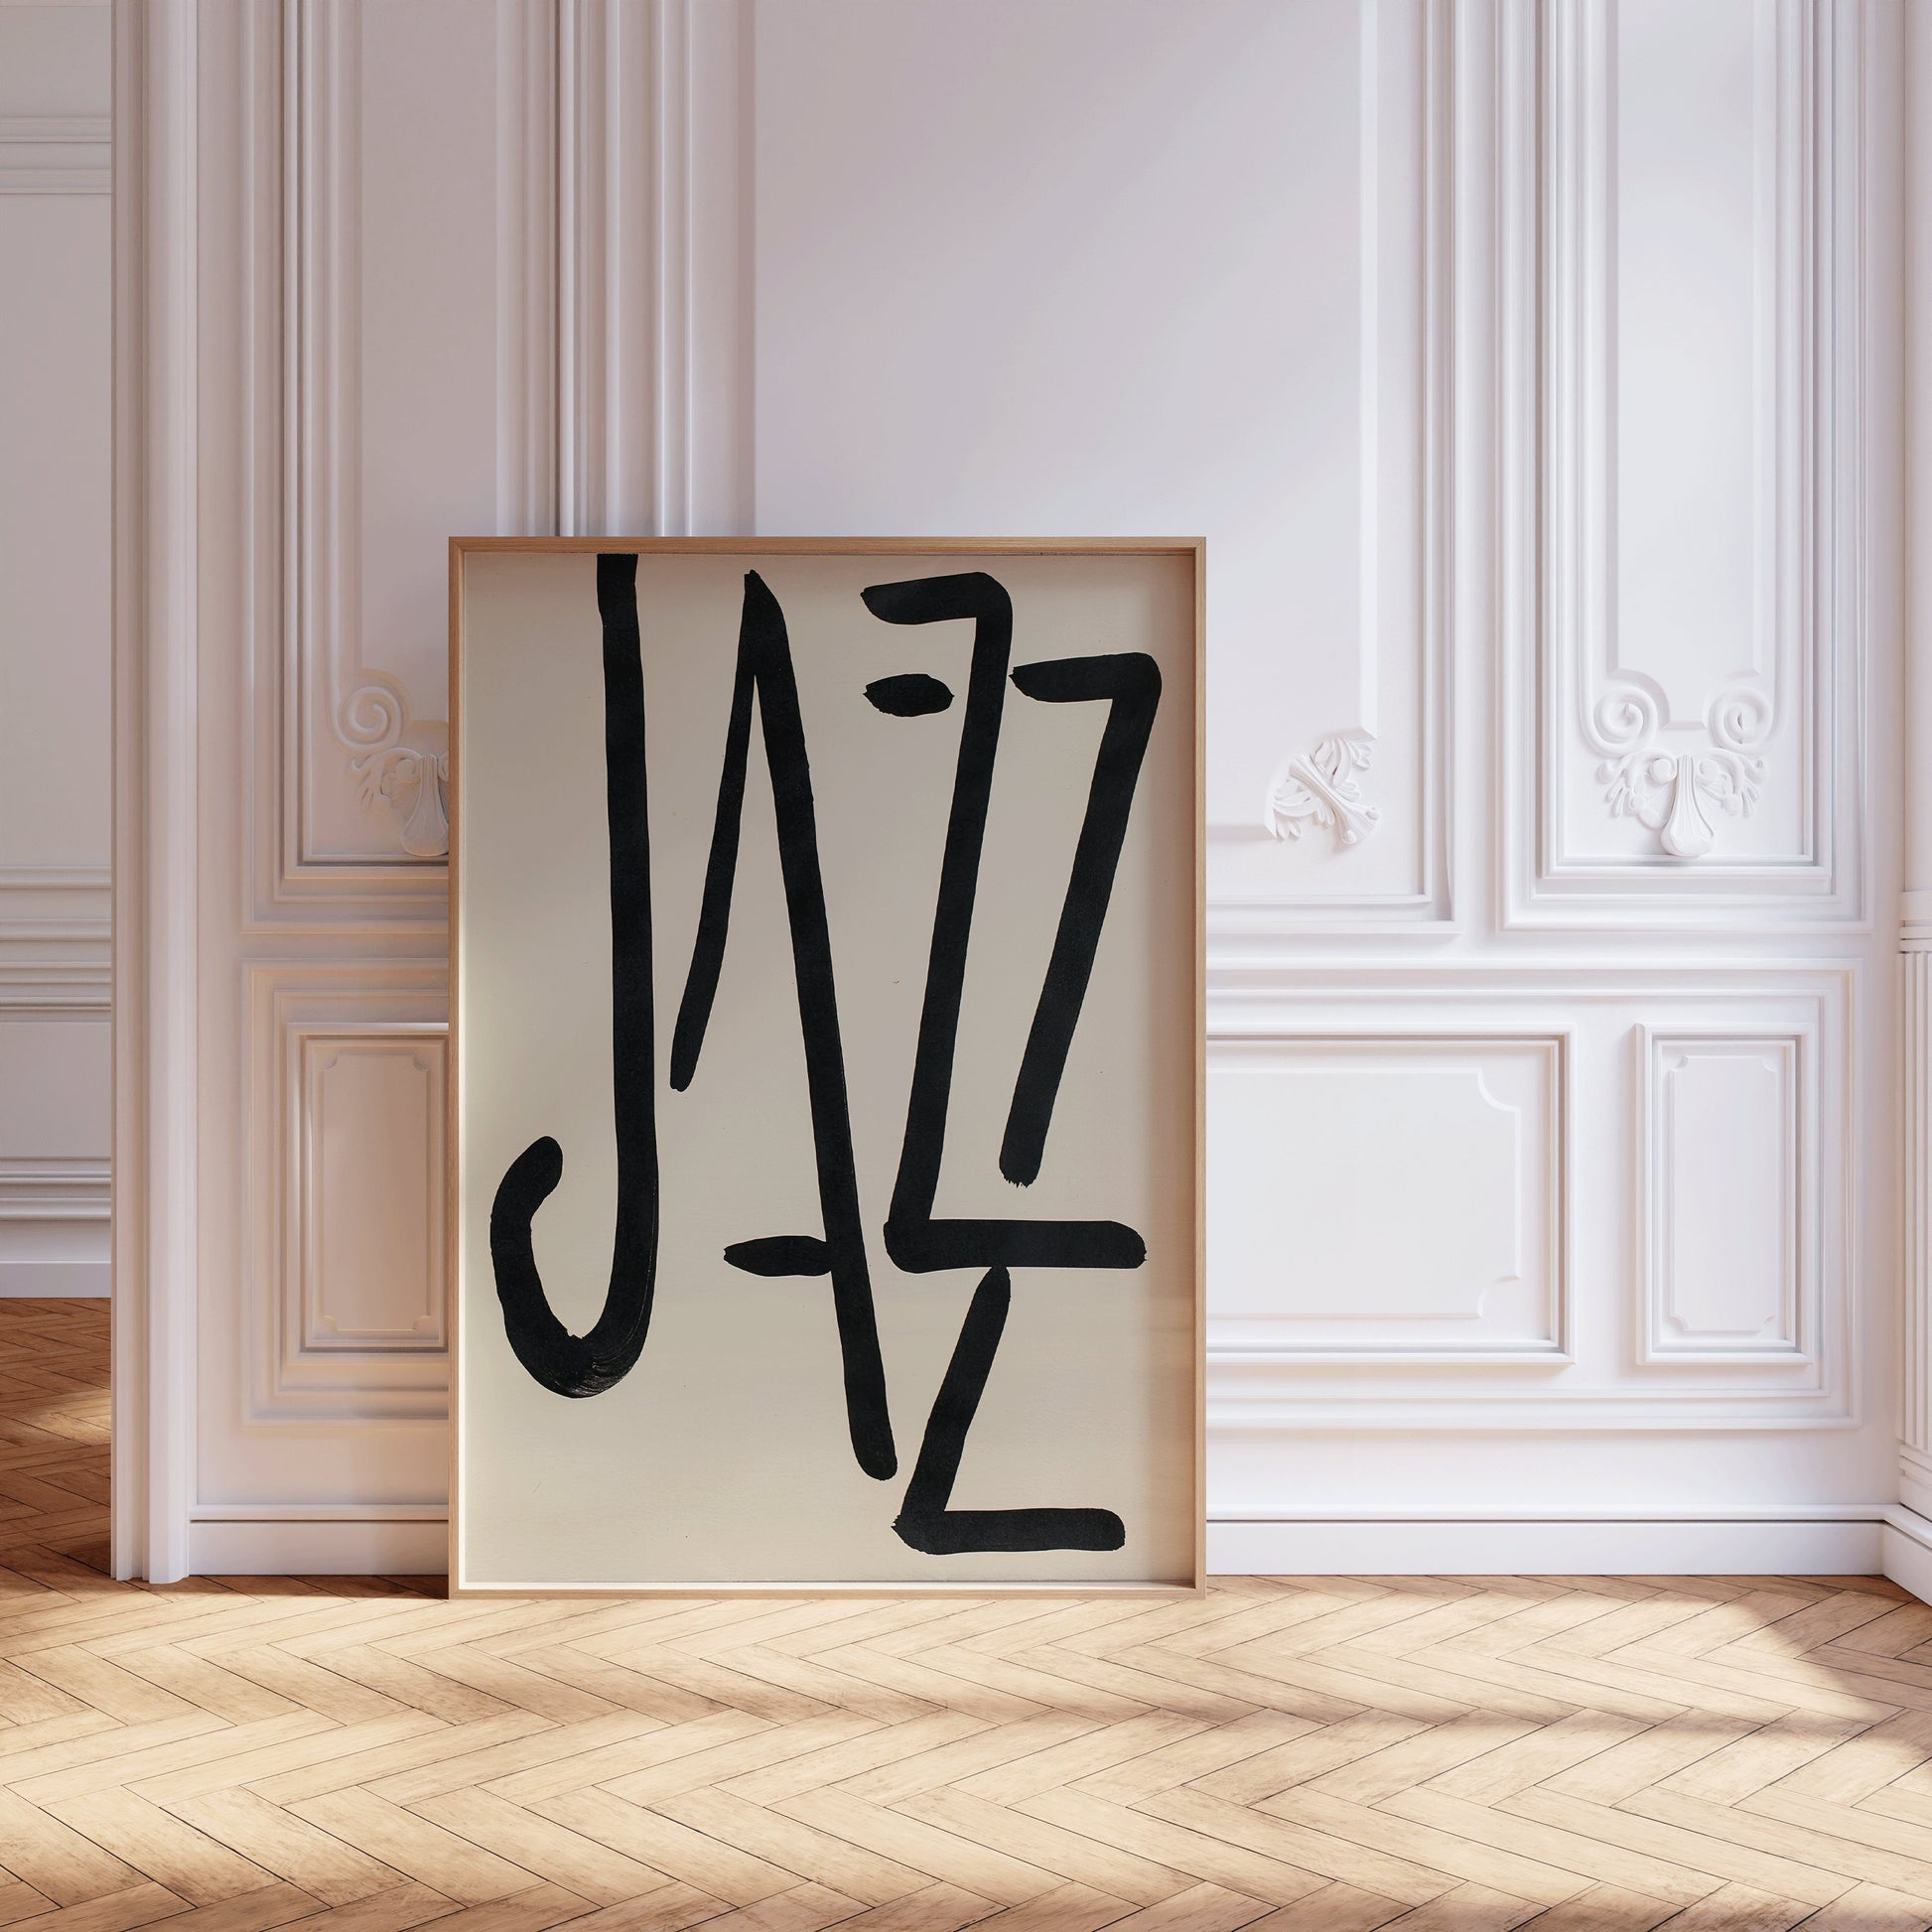 Henri Matisse - JAZZ | Vintage Mid-Century Modern Typography Poster (available framed or unframed)